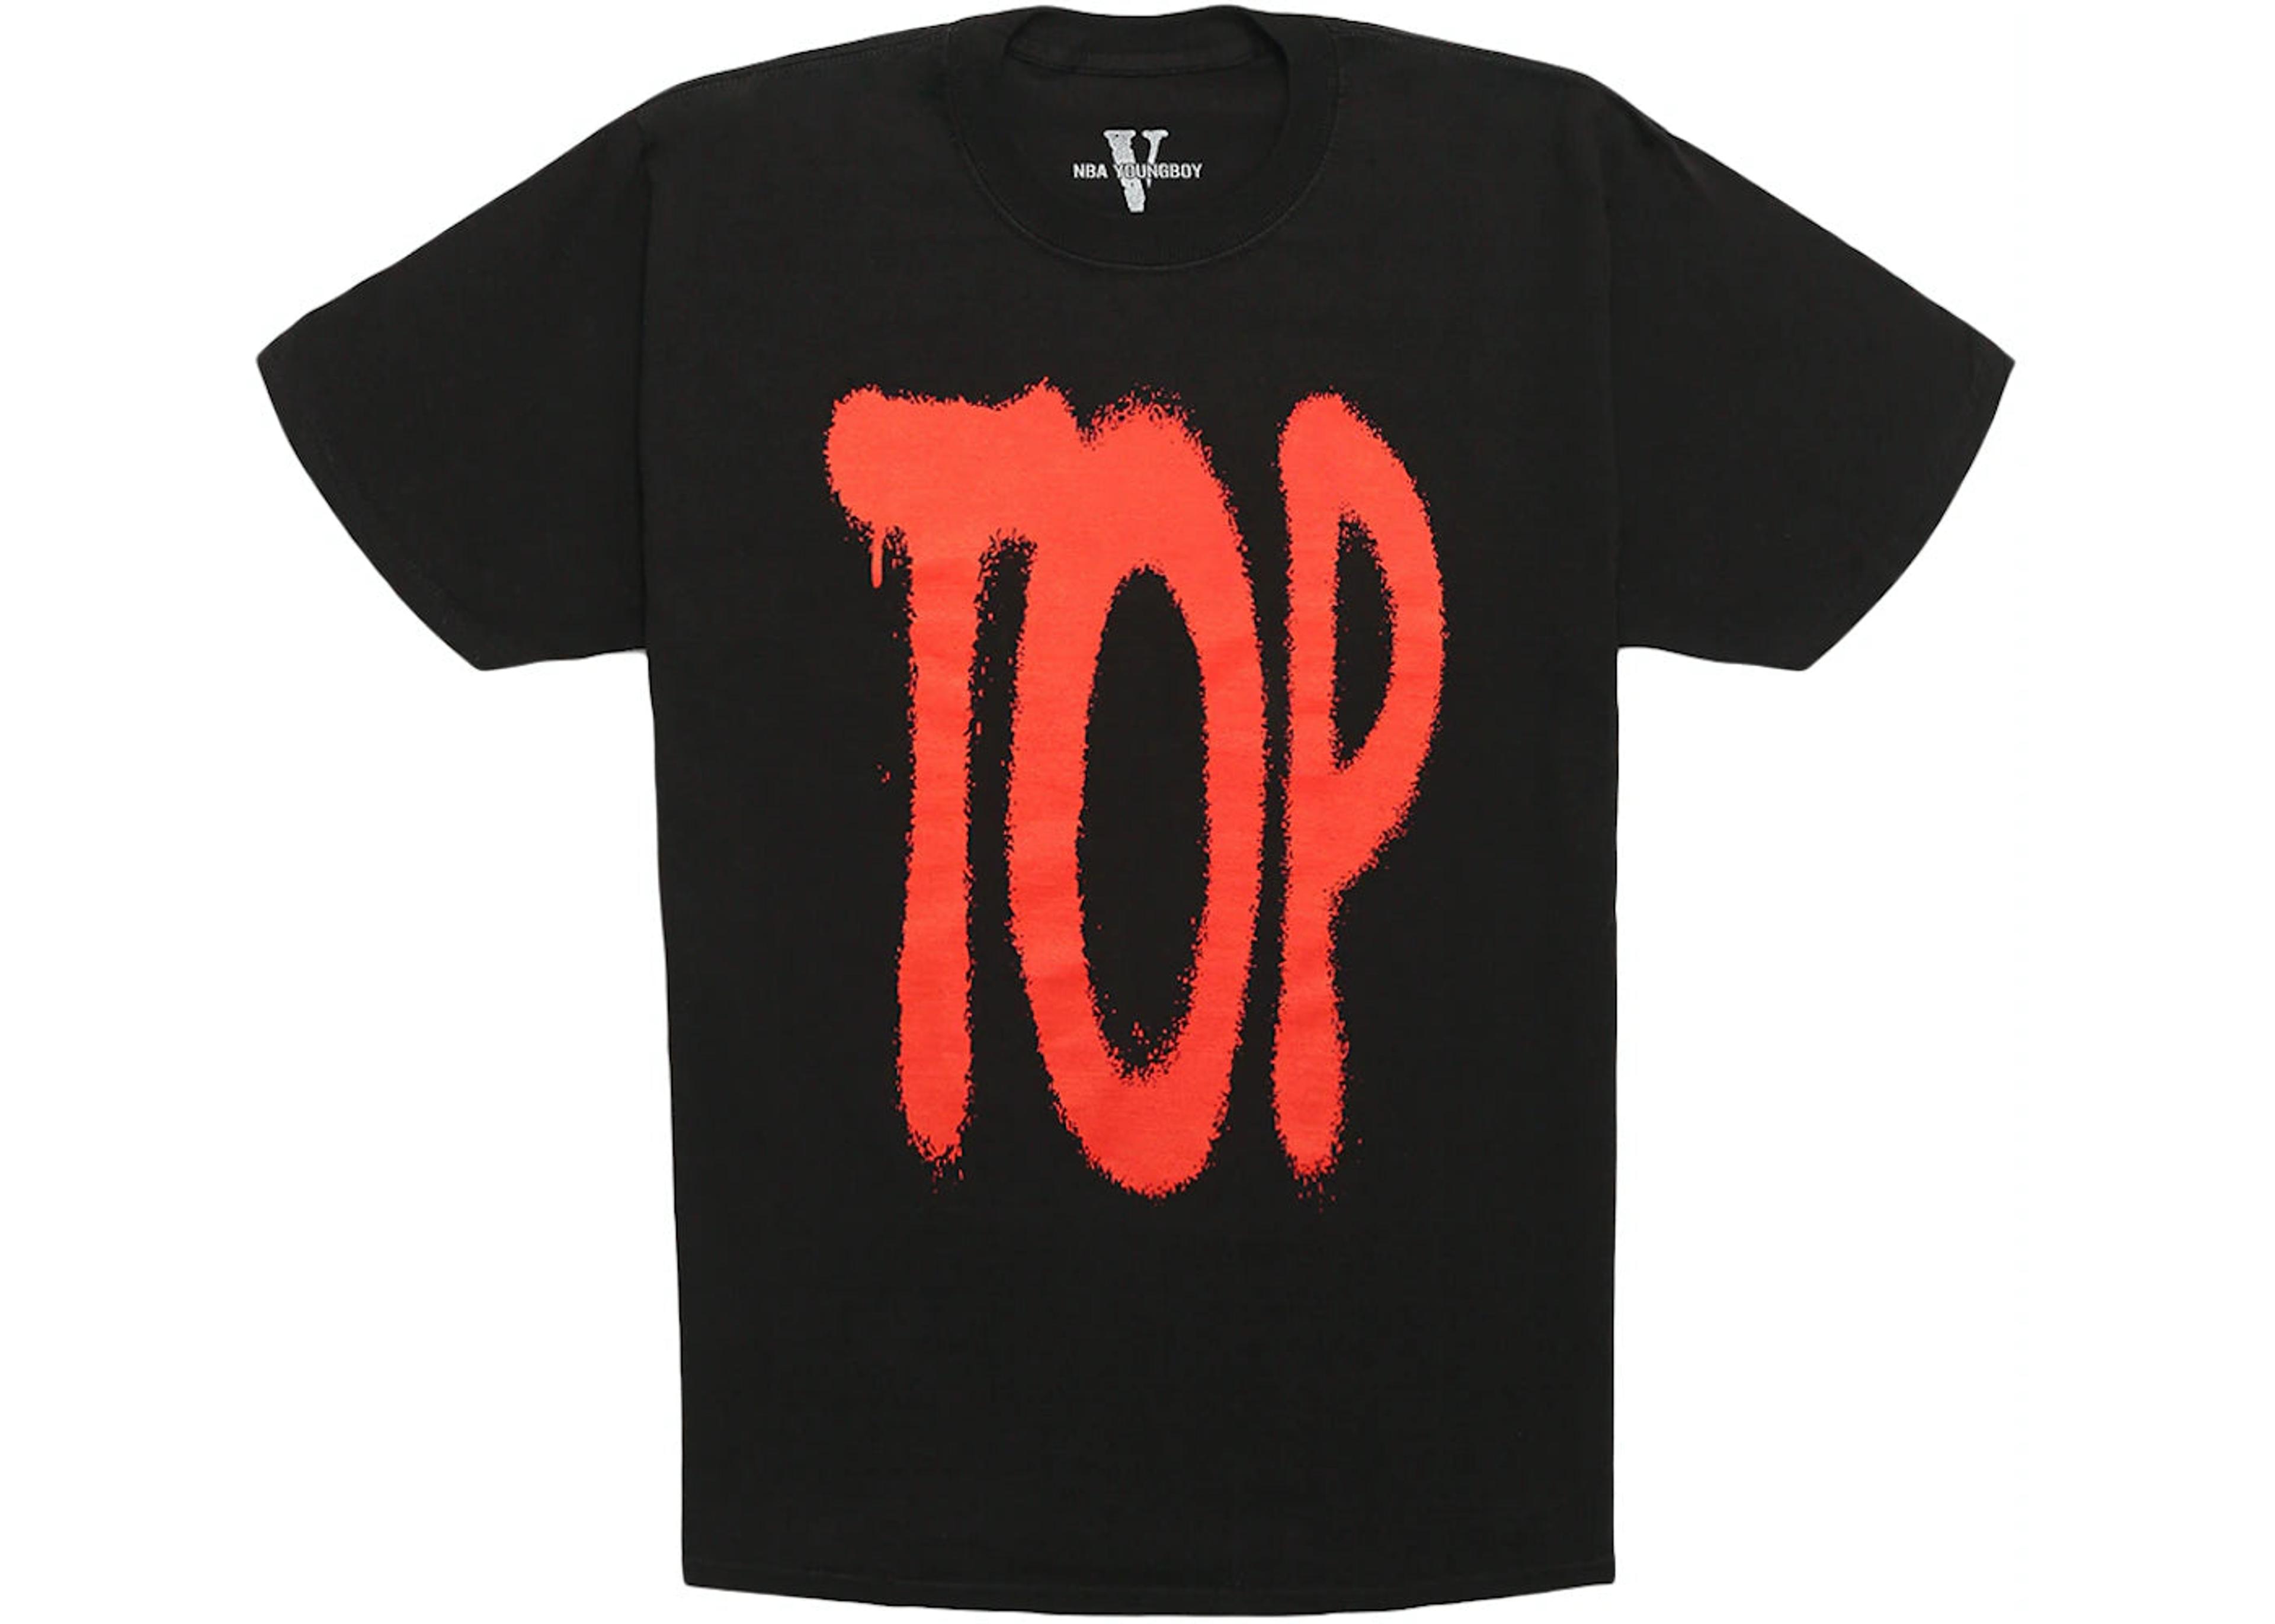 NBA Youngboy x Vlone 'Top' T-Shirt